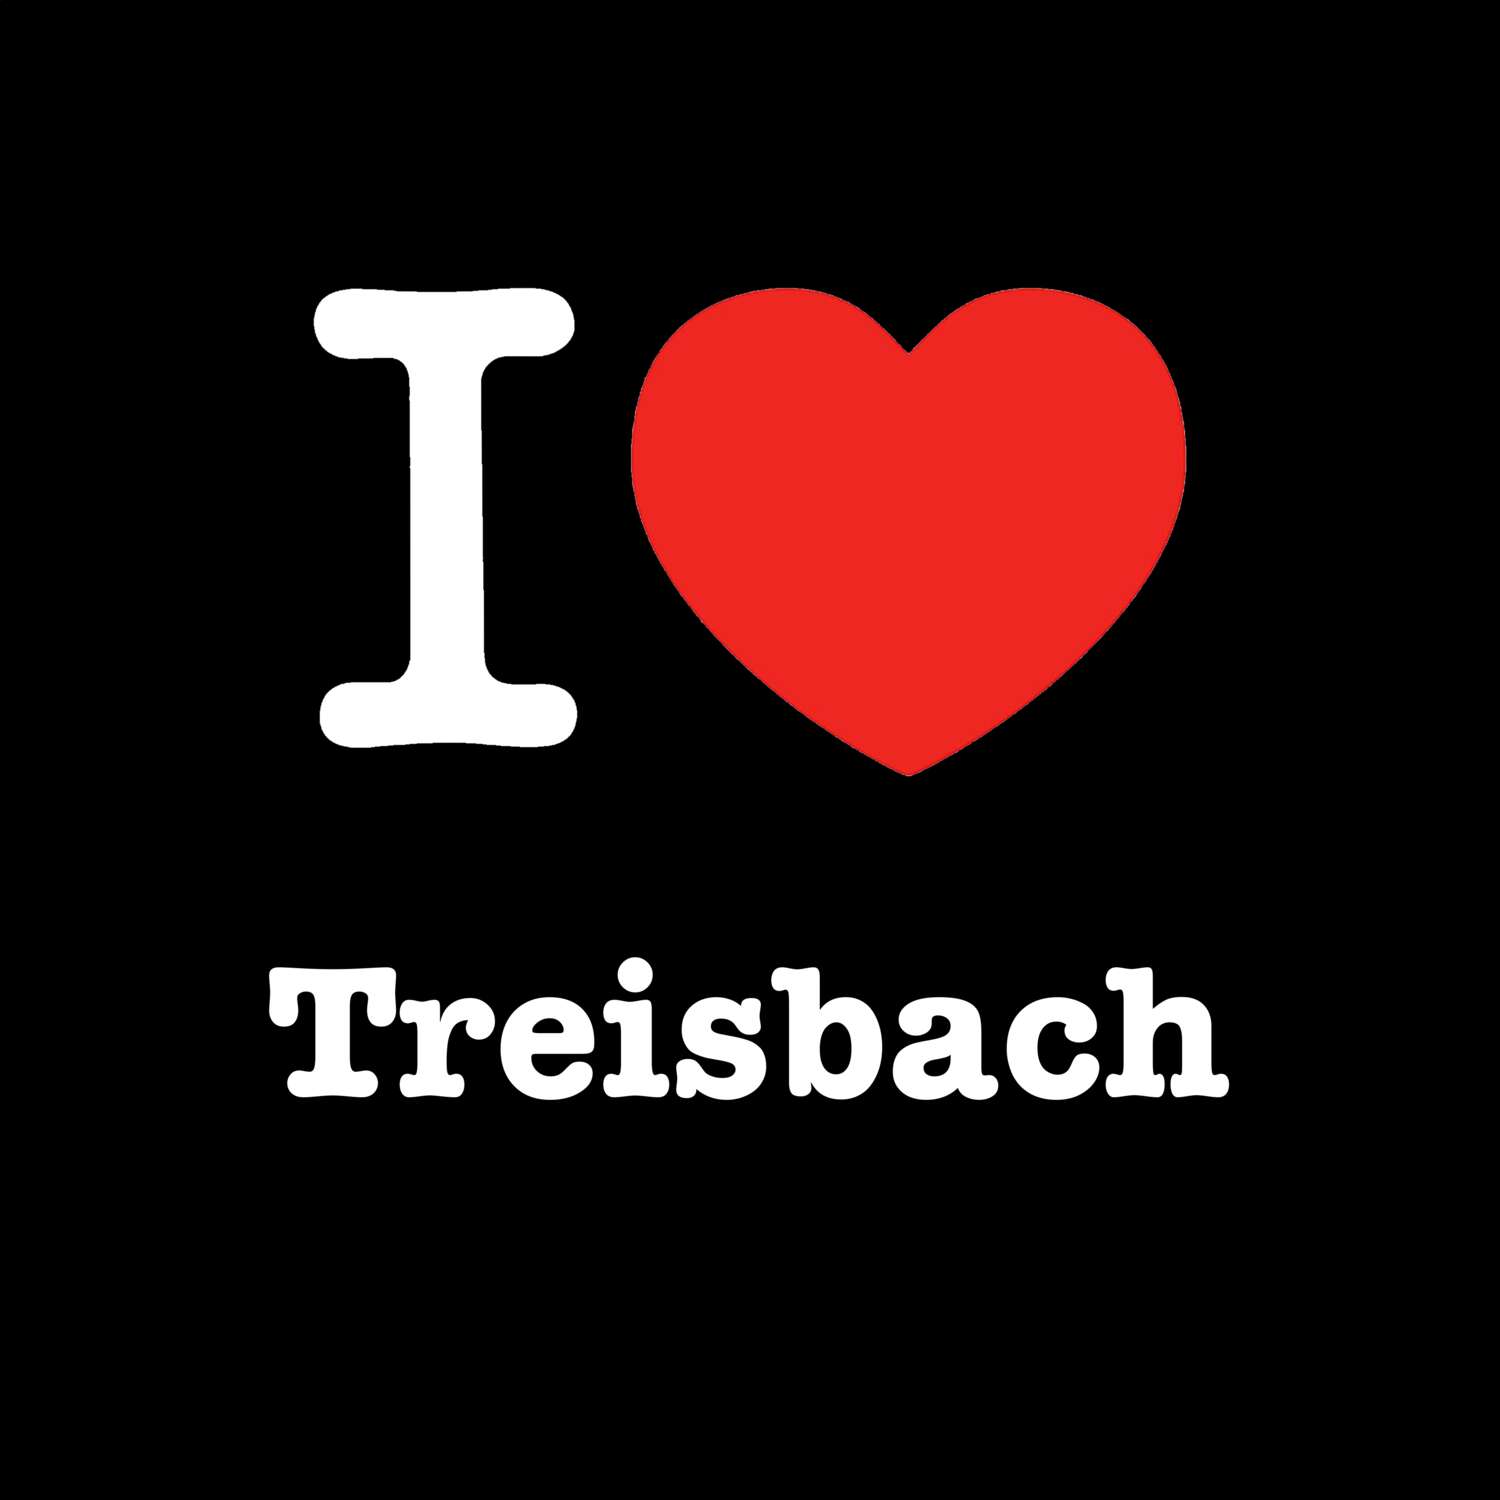 Treisbach T-Shirt »I love«